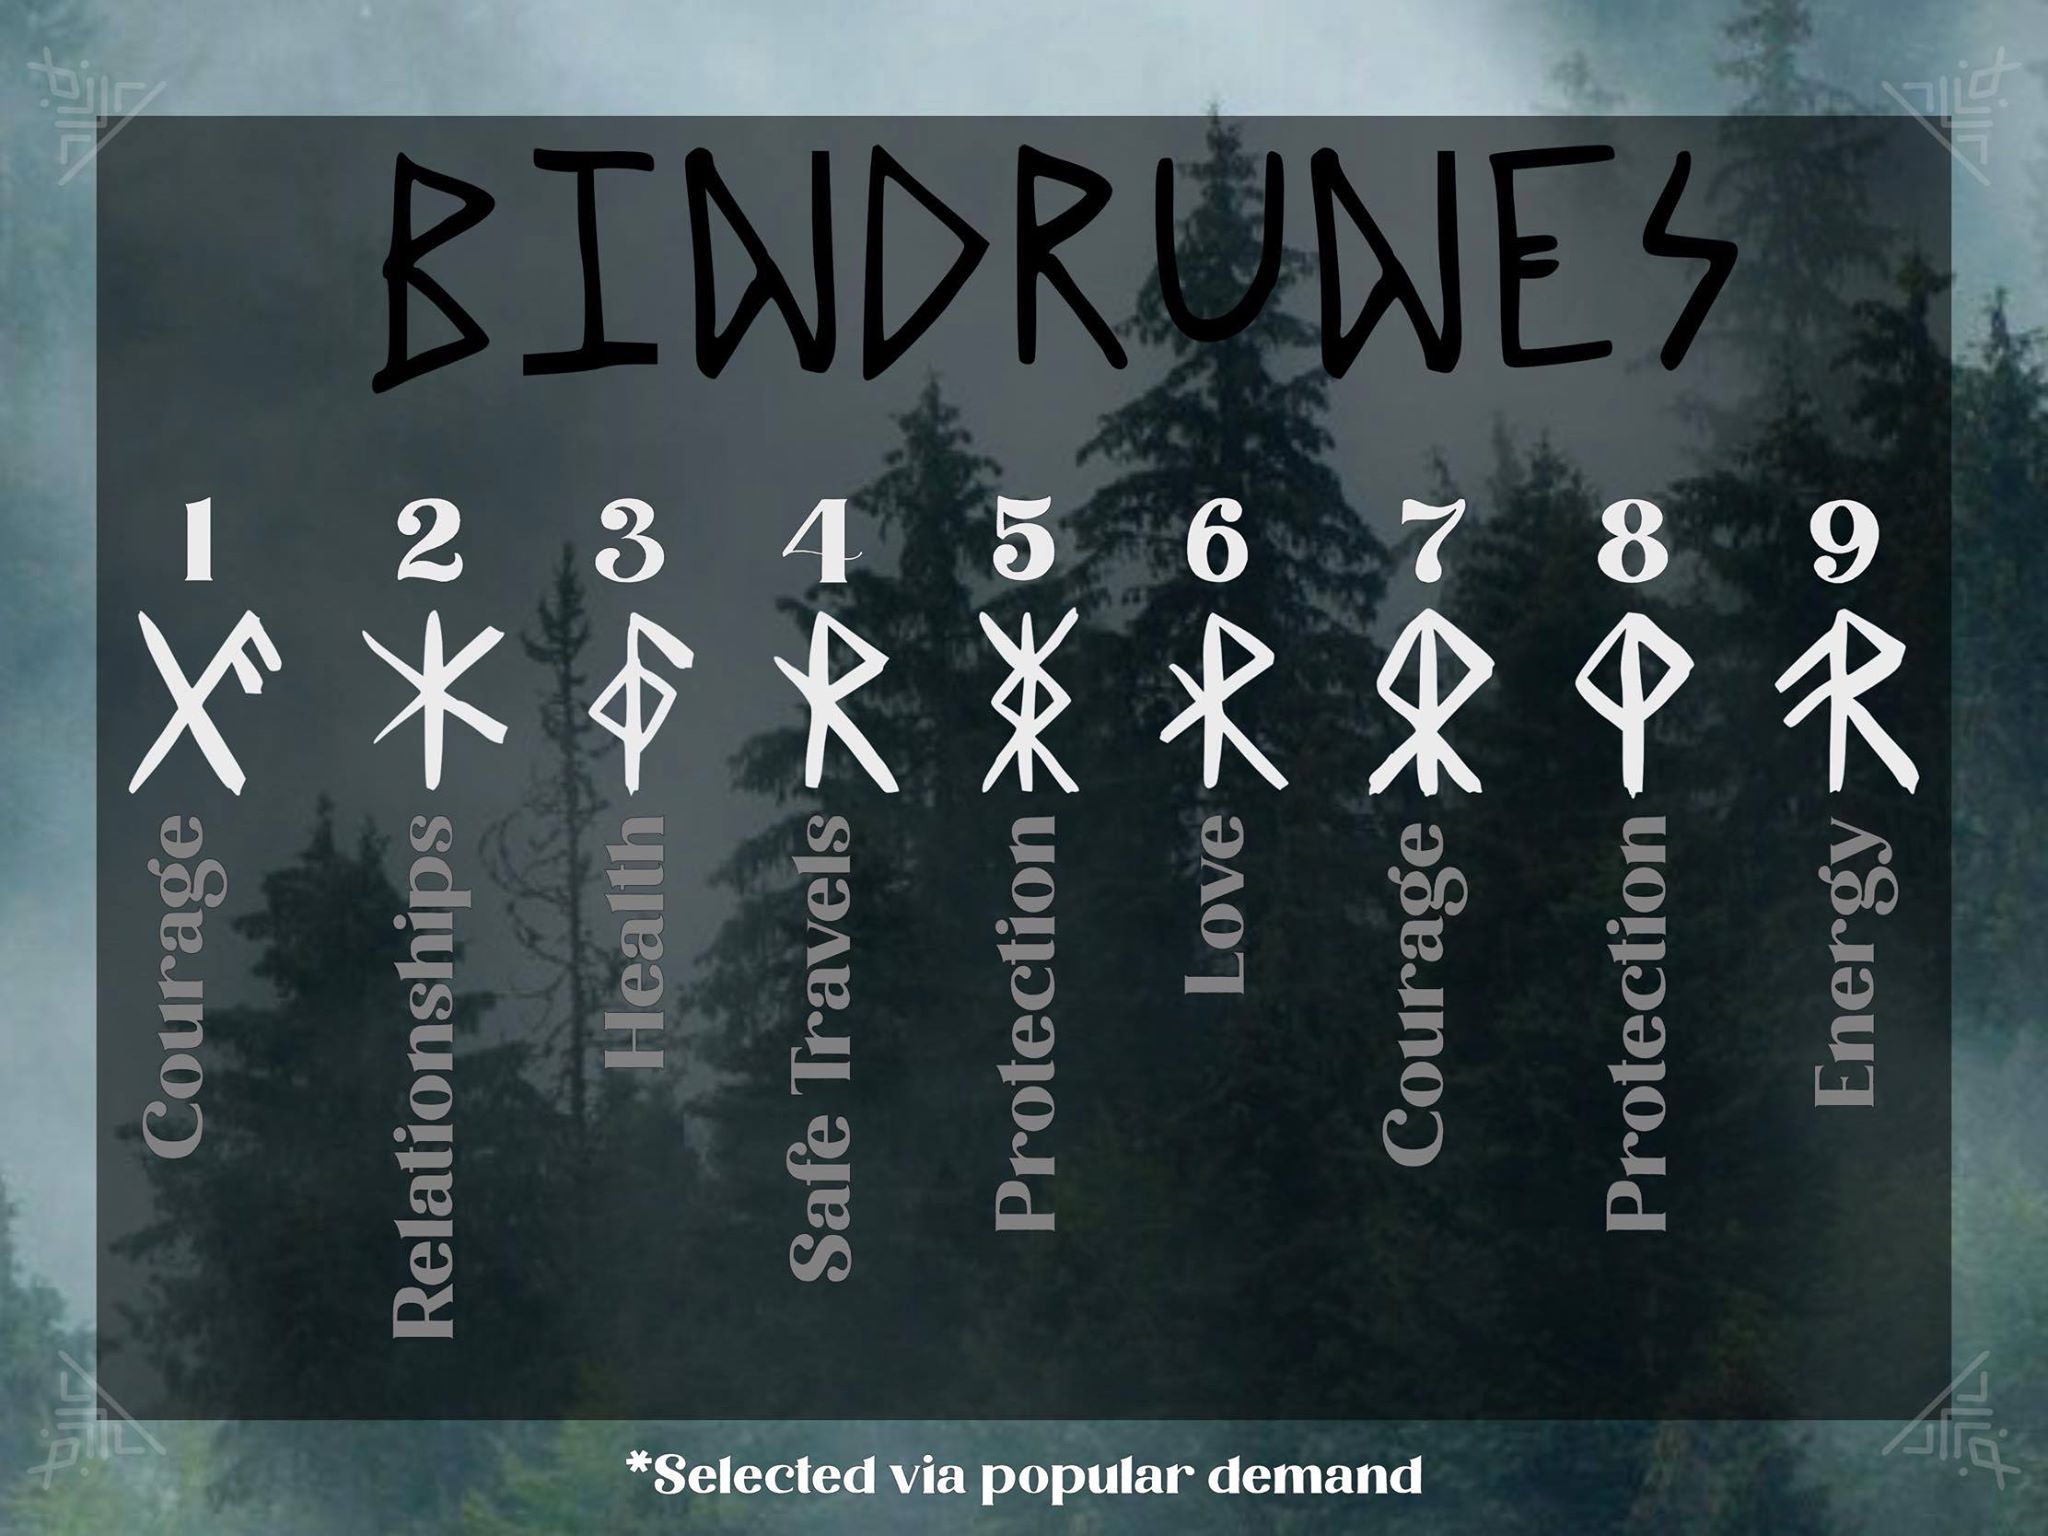 9th rune elder futhark